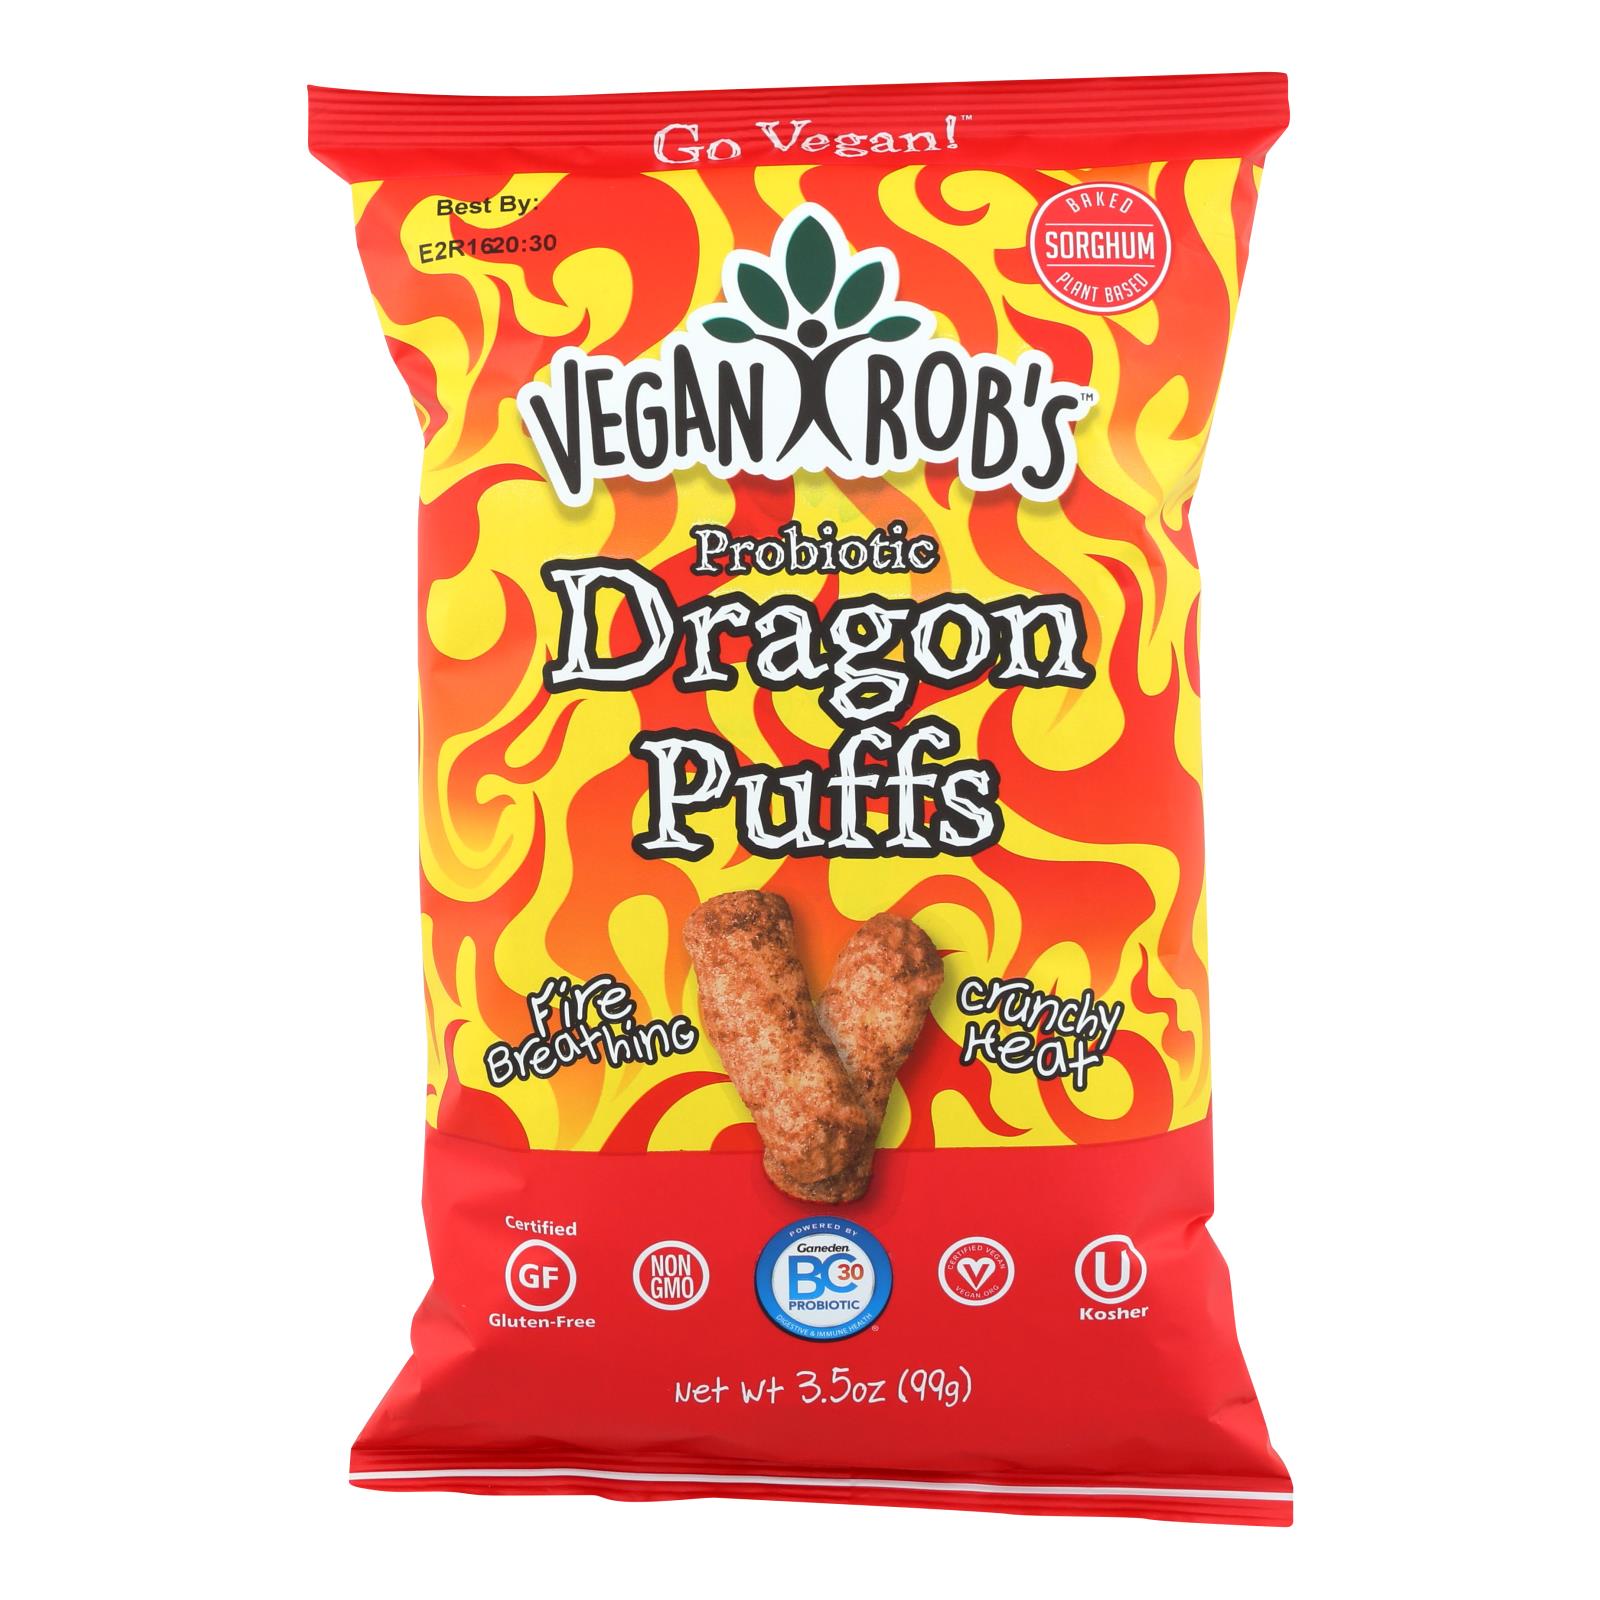 Vegan Rob's - Puffs Dragon - 12개 묶음상품 - 3.5 OZ